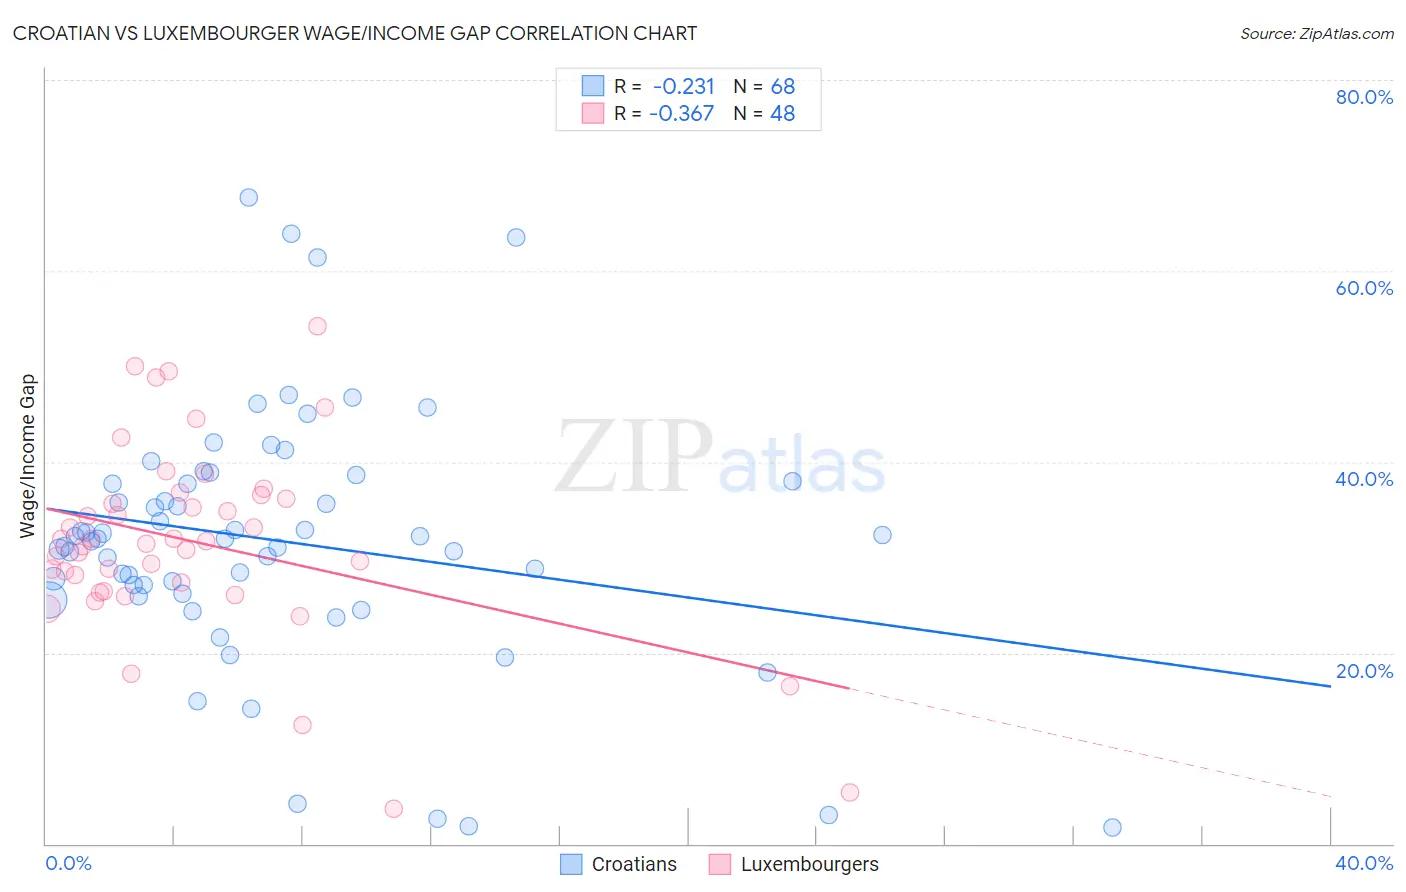 Croatian vs Luxembourger Wage/Income Gap